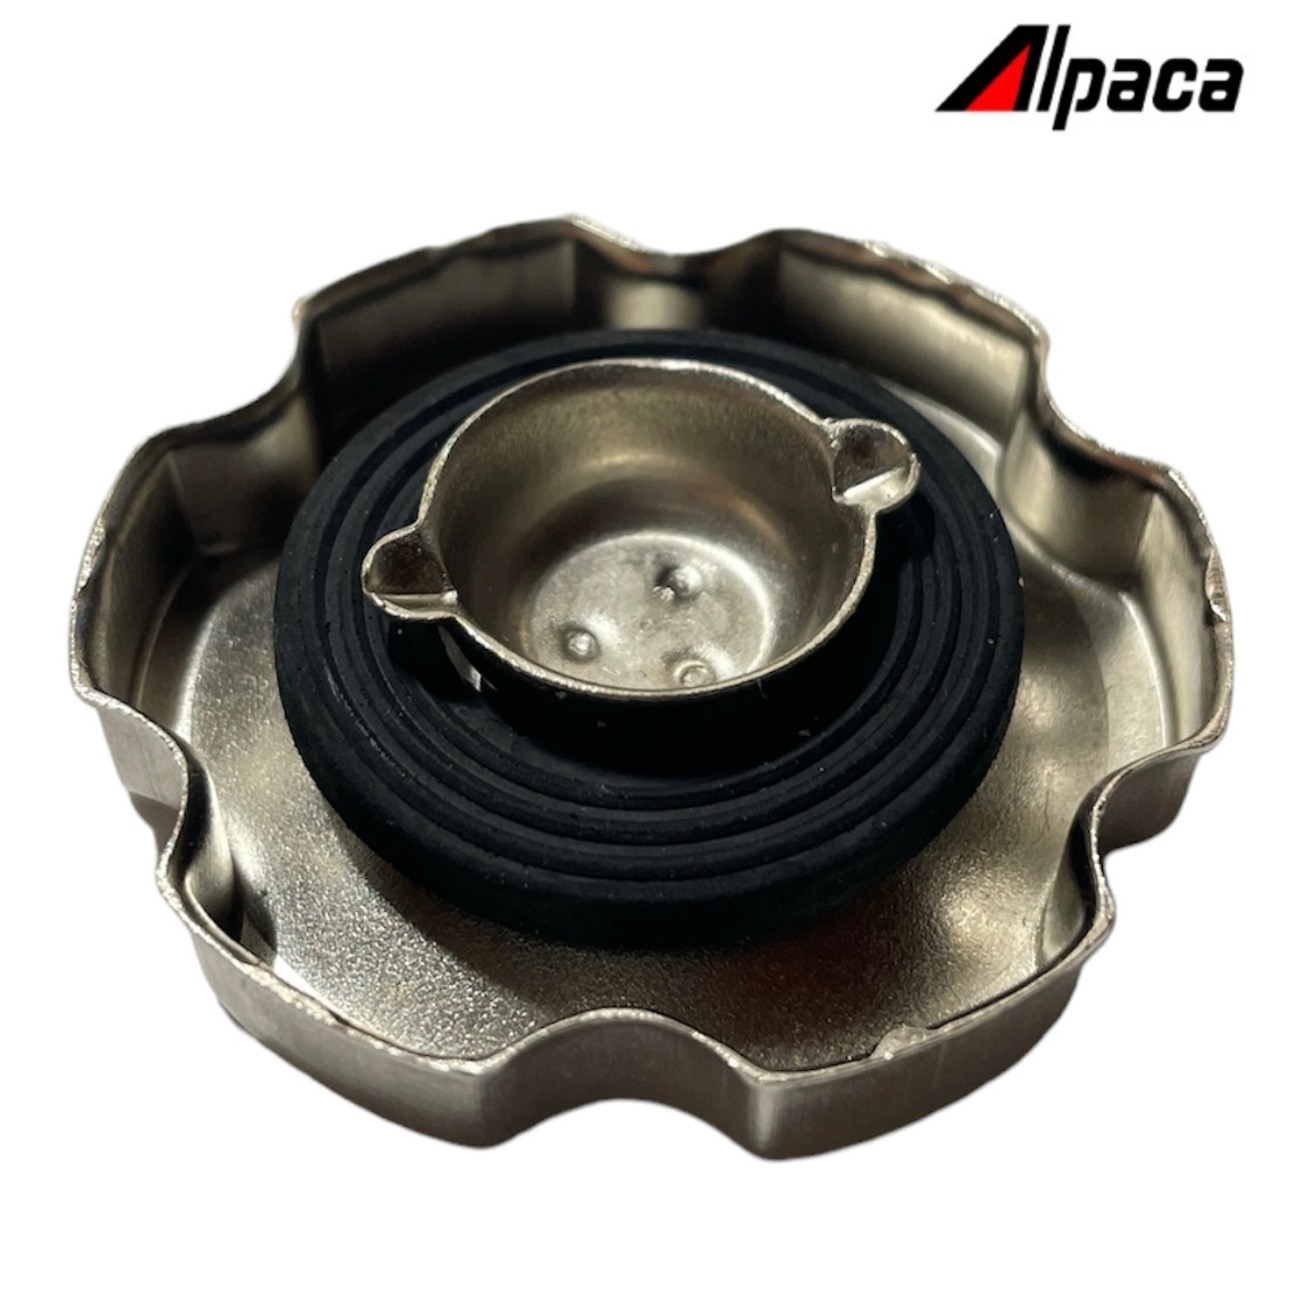  альпака плита оригинальная деталь горловина топливного бака колпак детали Alpca плита альпака TS77 TS77A compact 